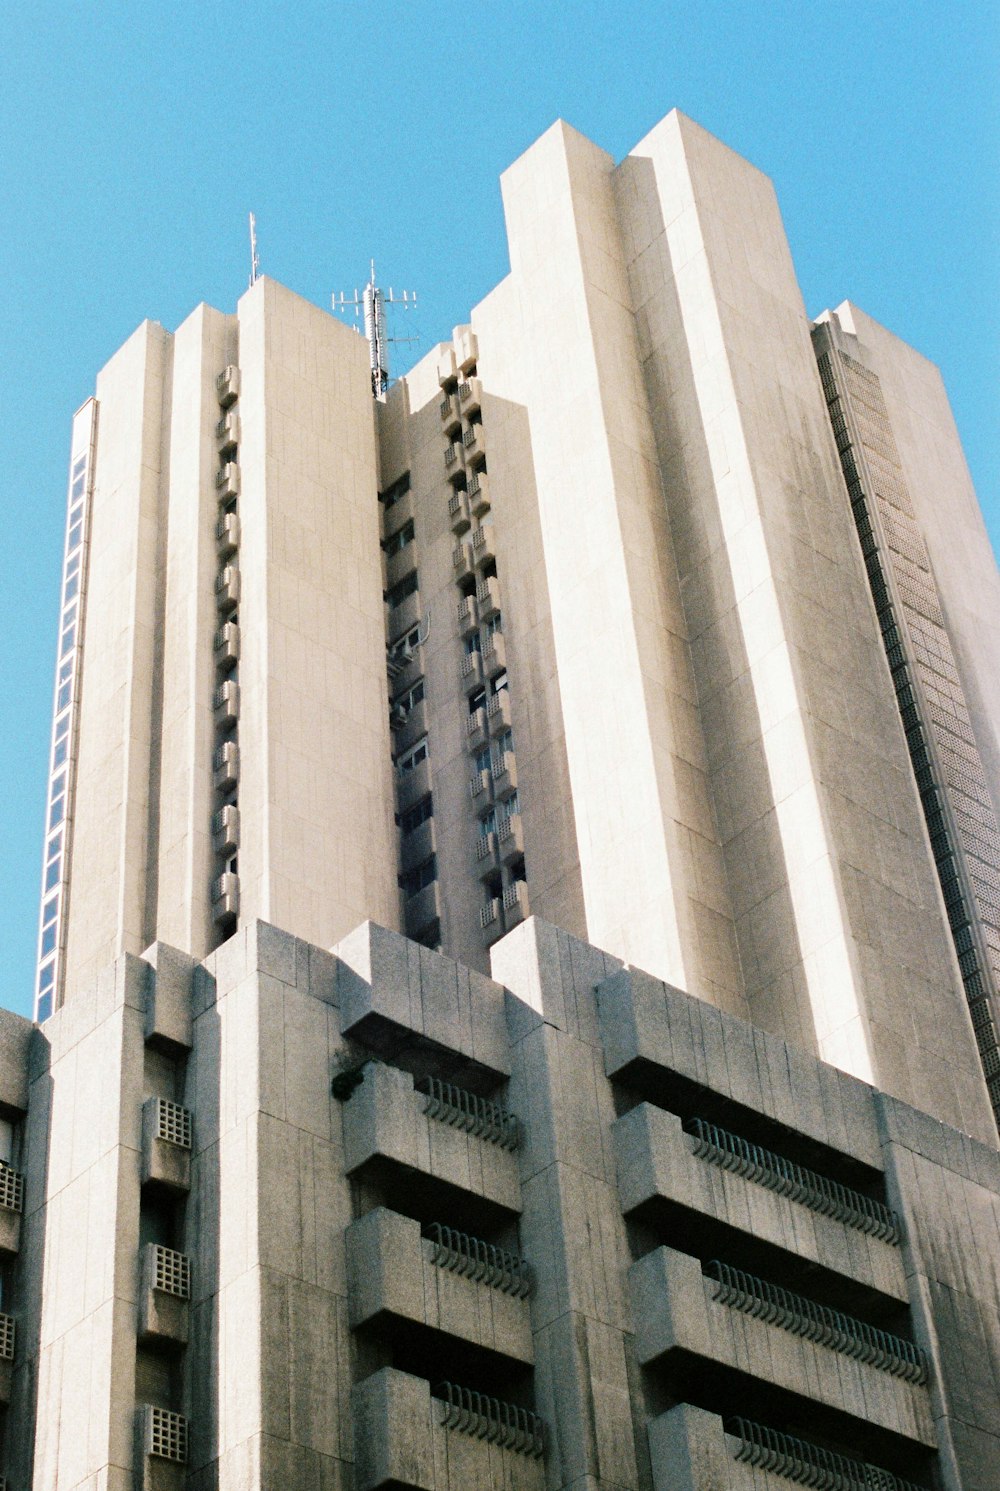 beige concrete building during daytime